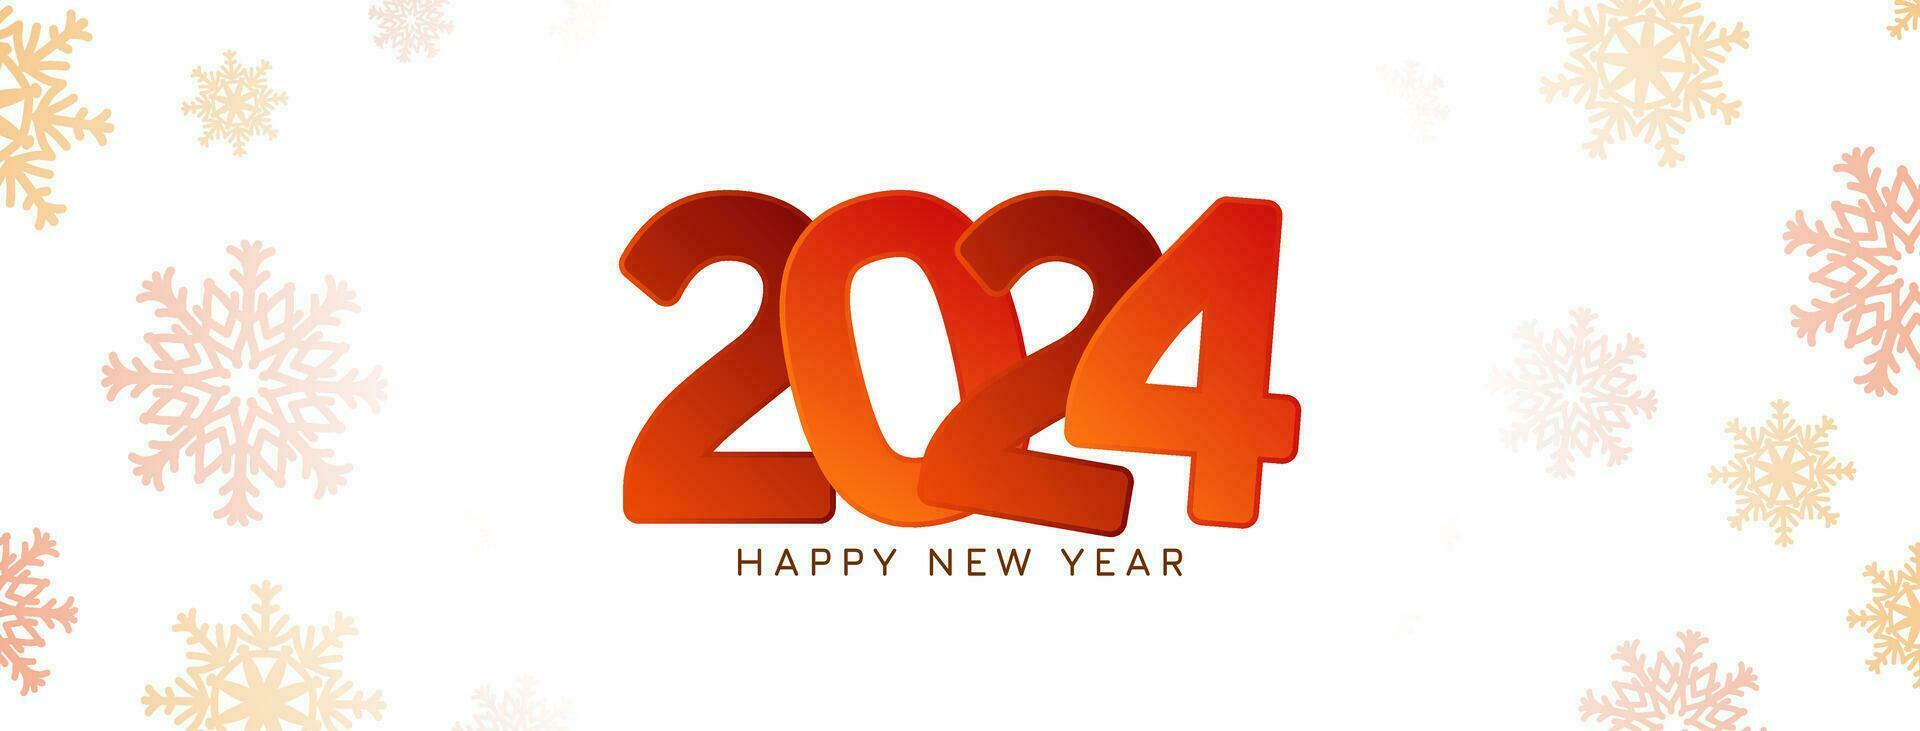 Happy new year 2024 creative elegant banner design vector